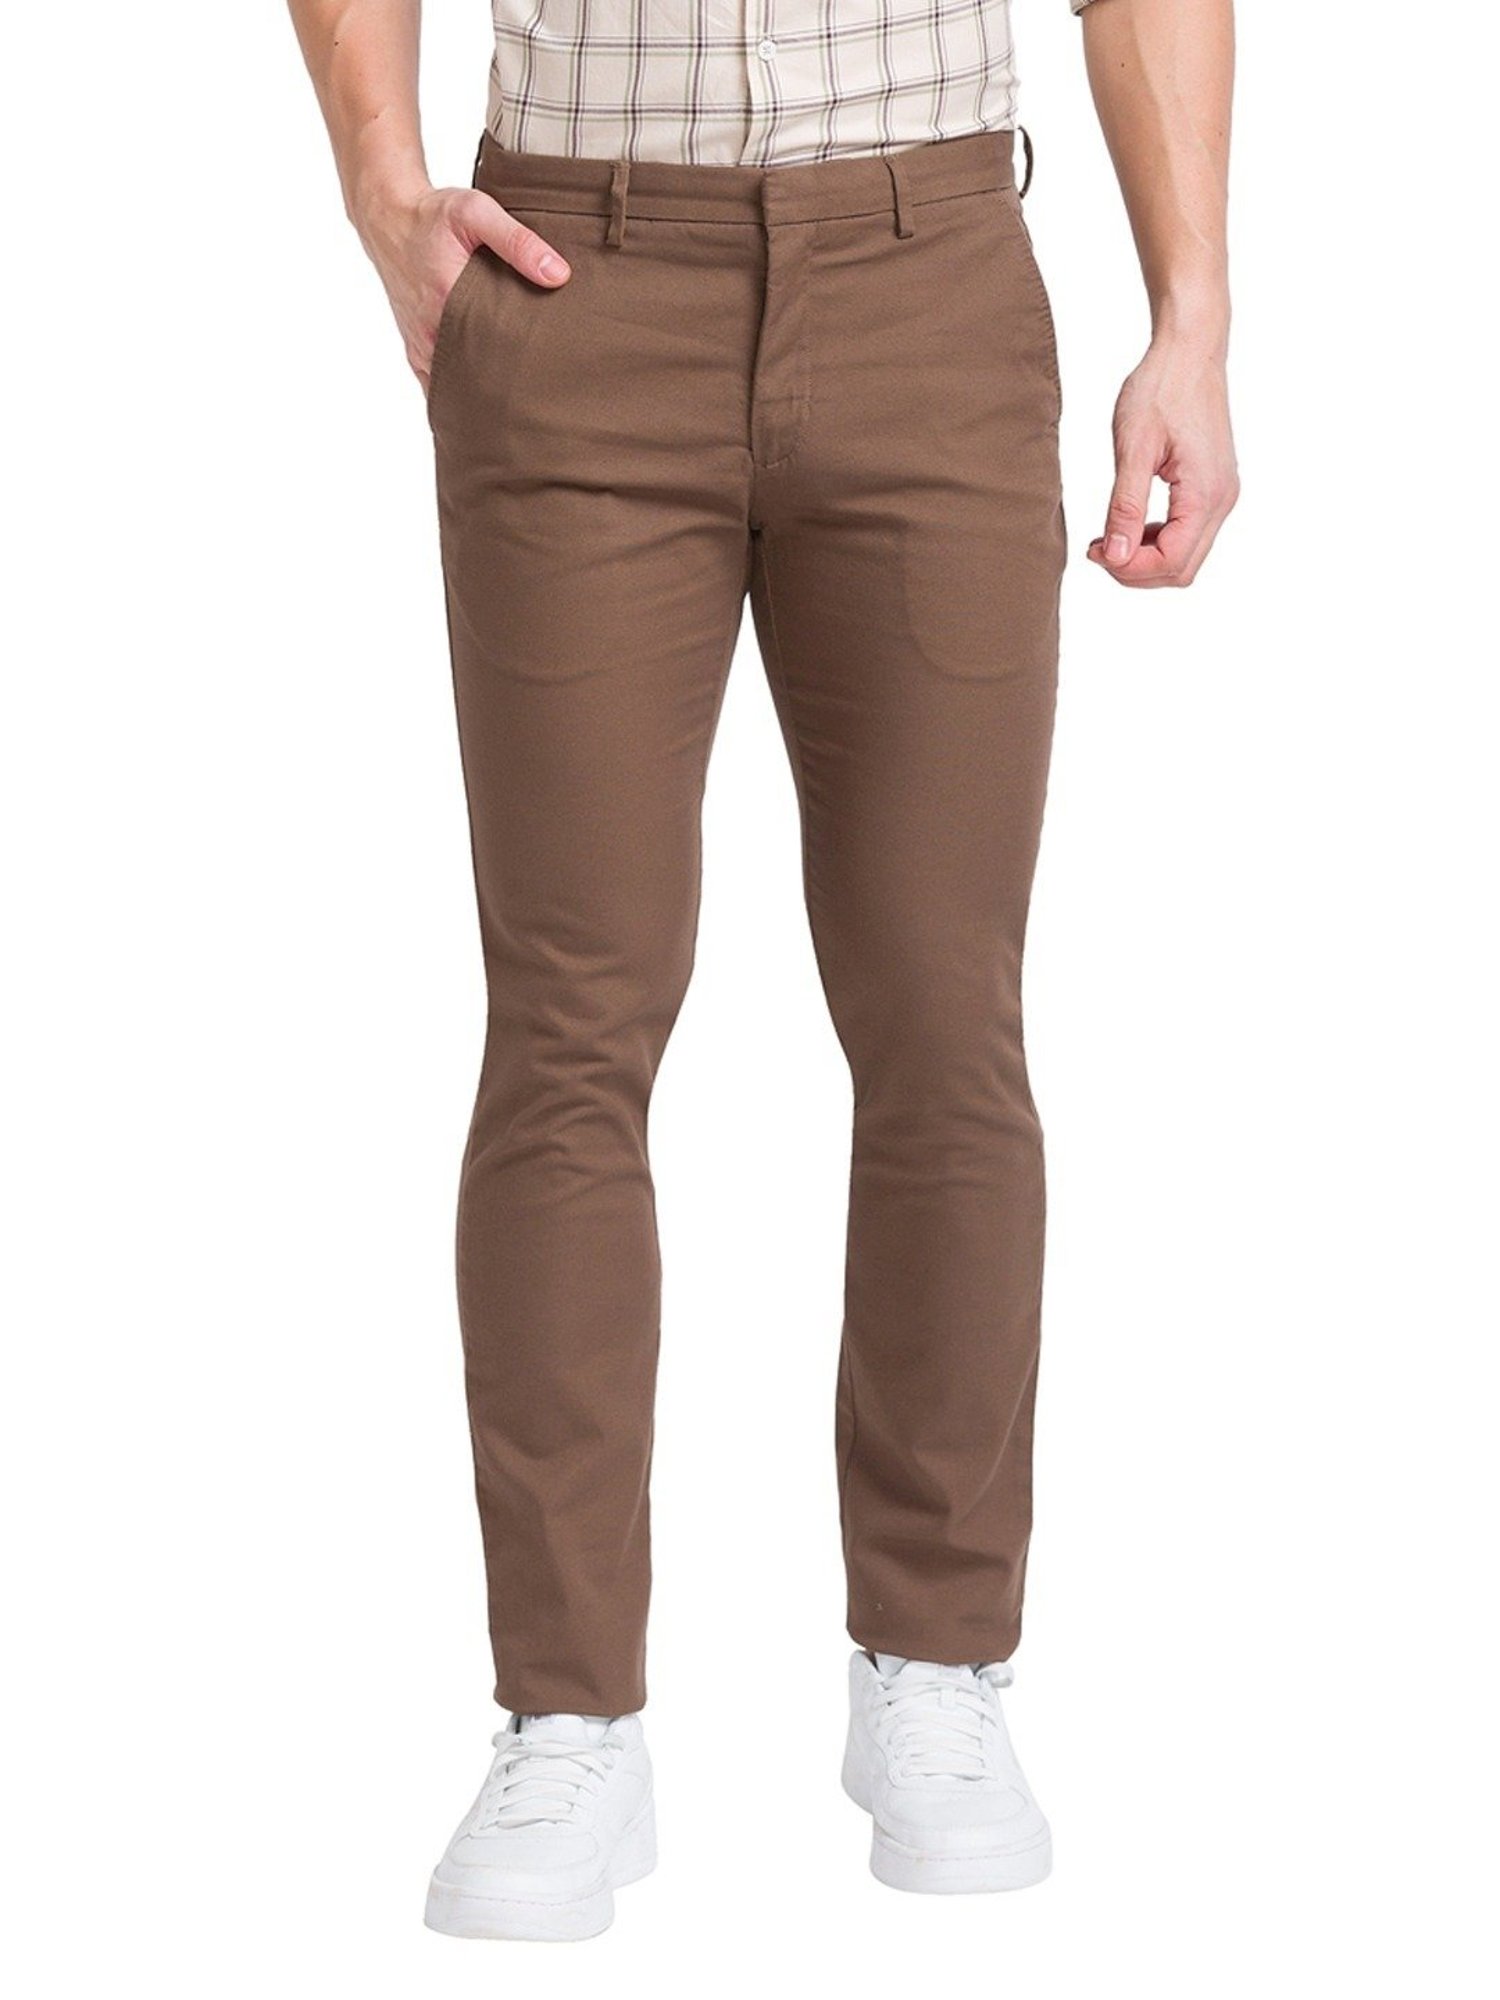 Regular Fit Linen-blend trousers - Dark brown - Men | H&M HK